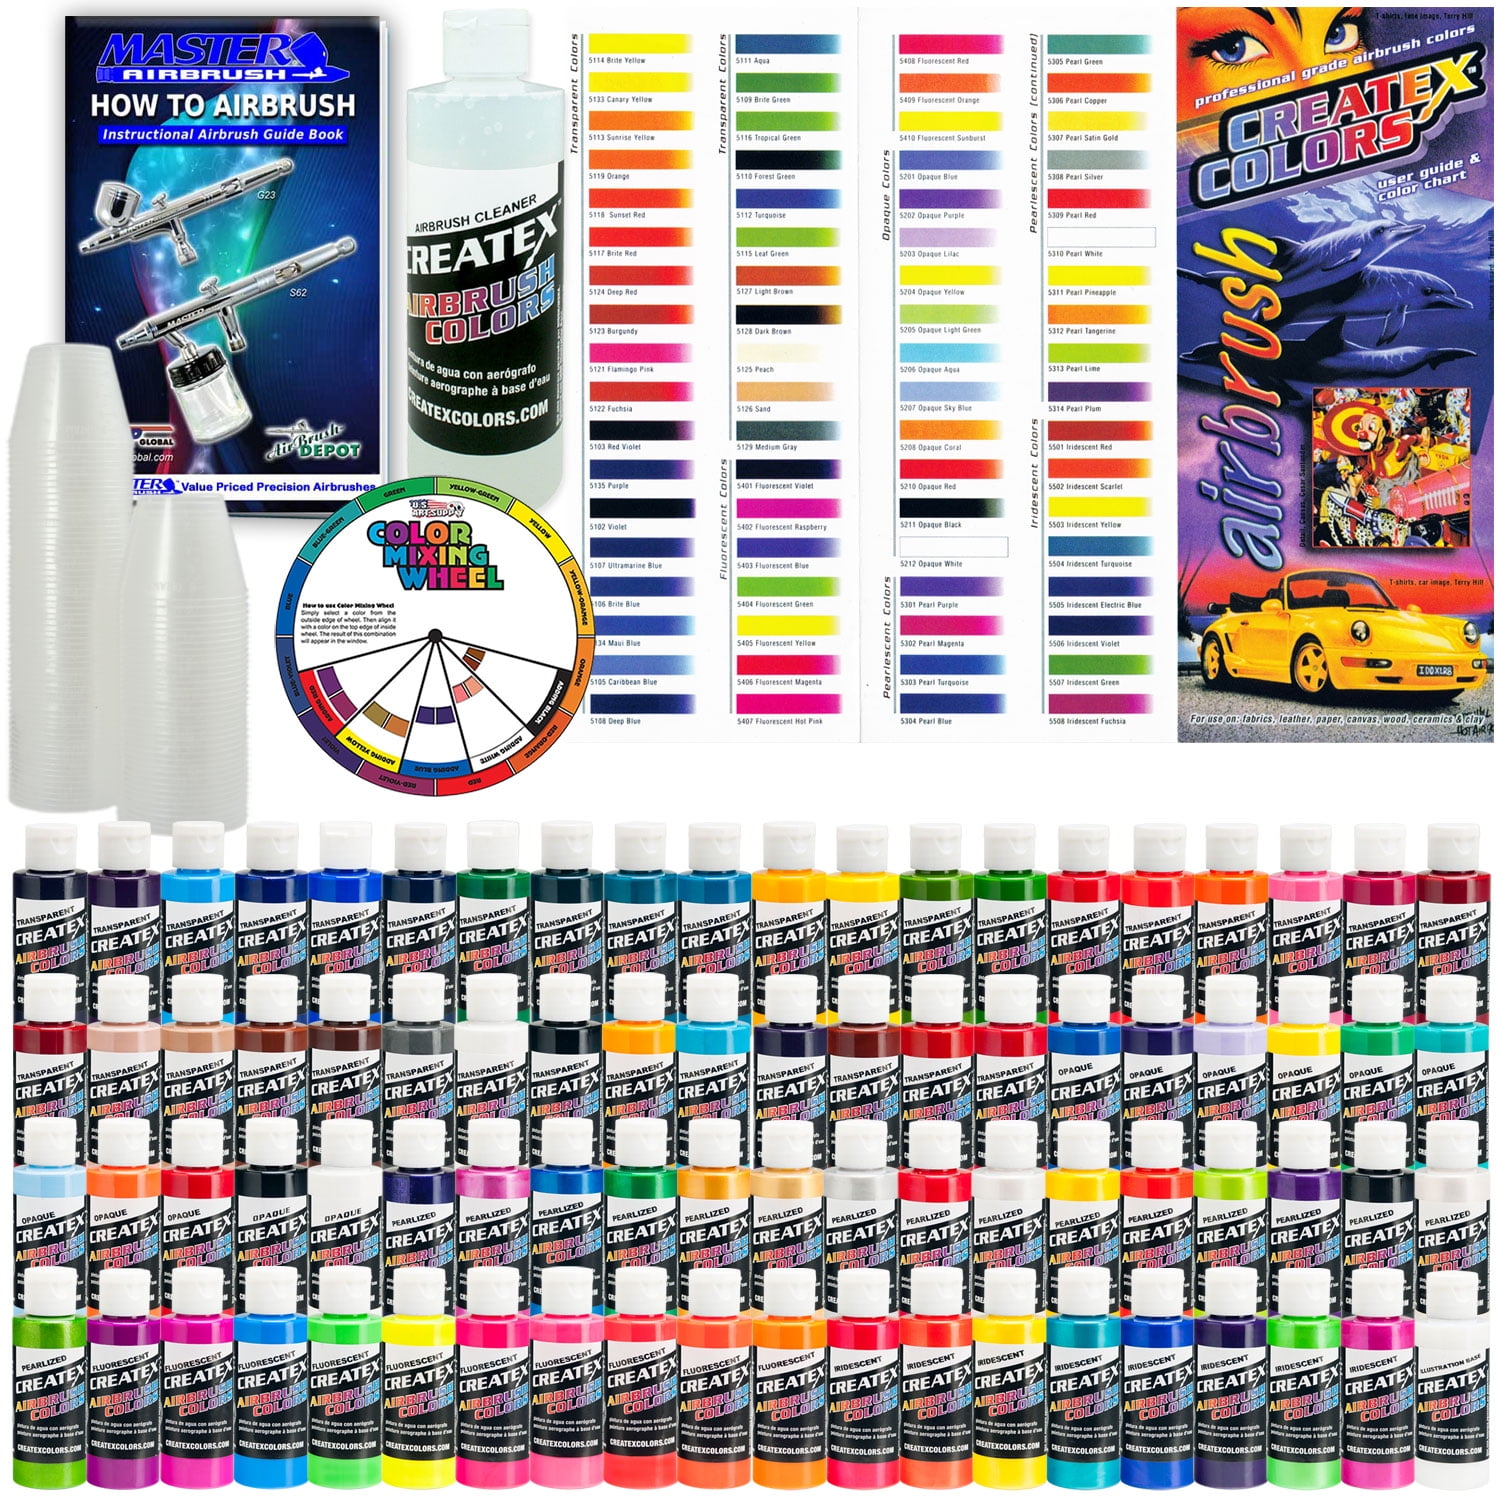 Createx Fluorescent Airbrush Paint Set of 6 Colors, 2 oz.